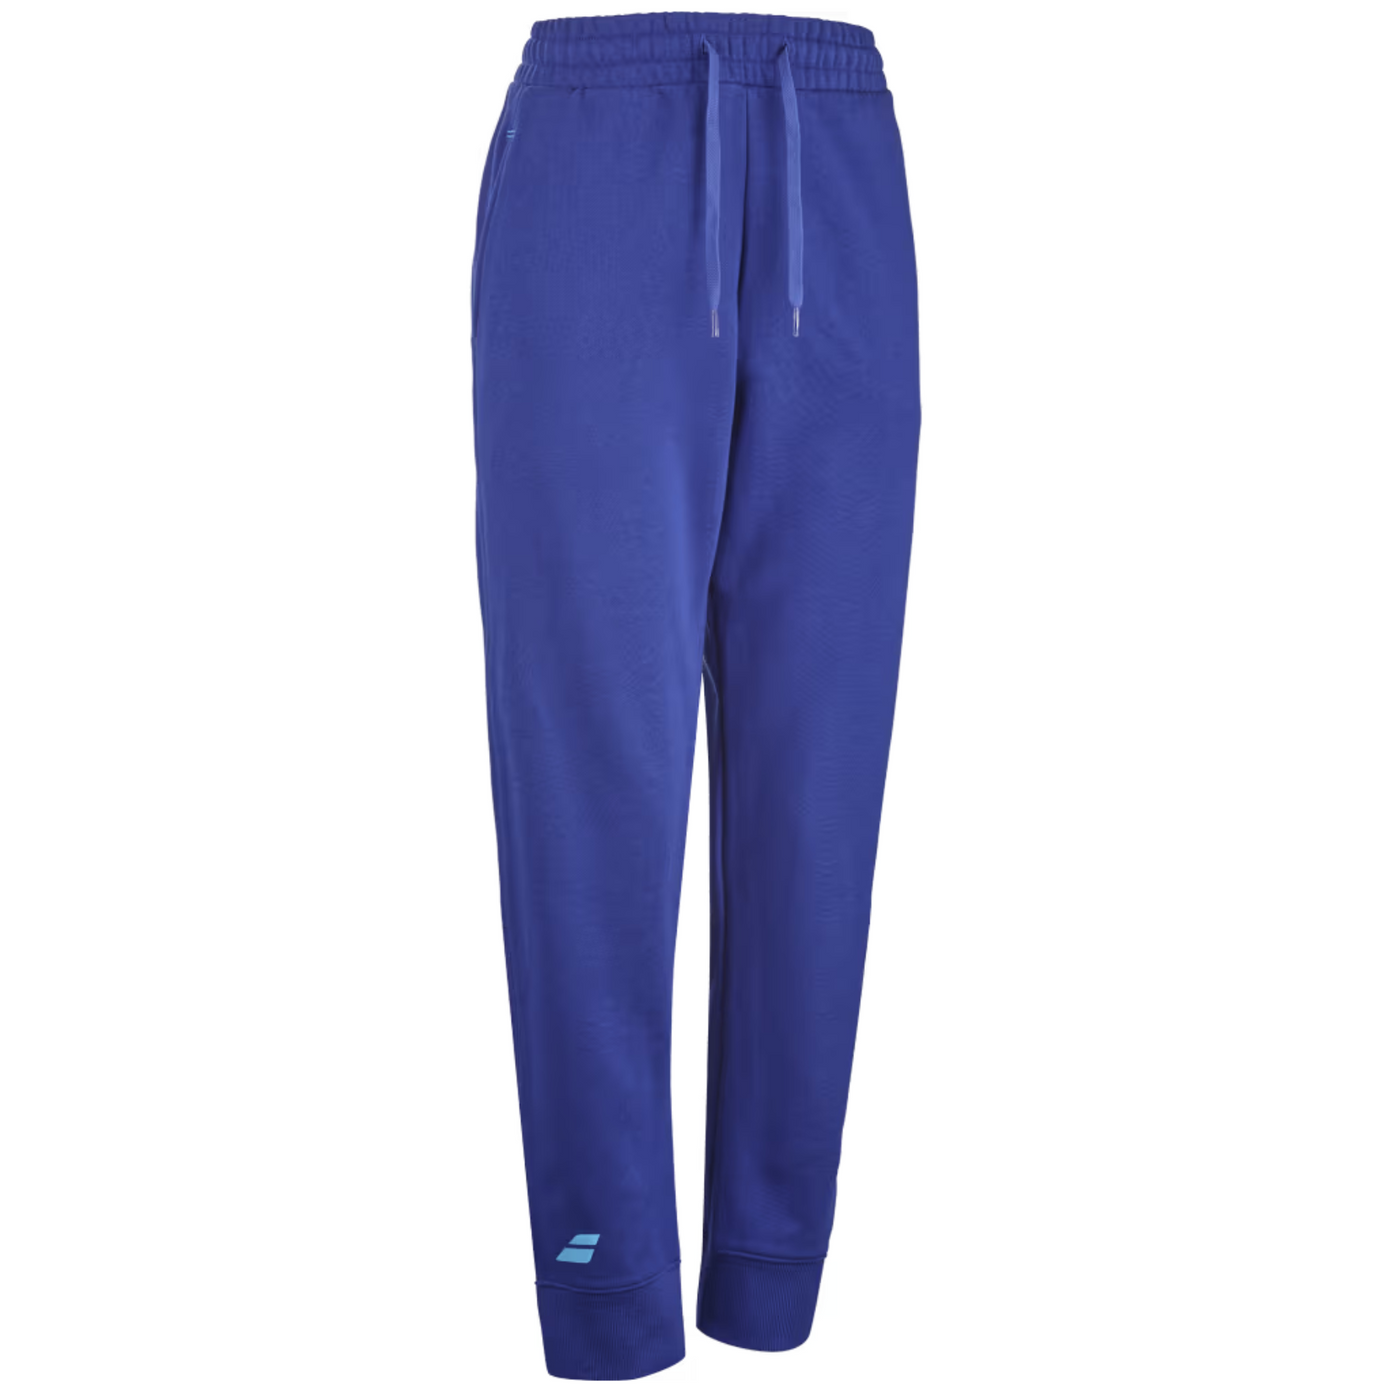 Babolat Exercise Women Jogger Pants 4118 - Sodalite Blue